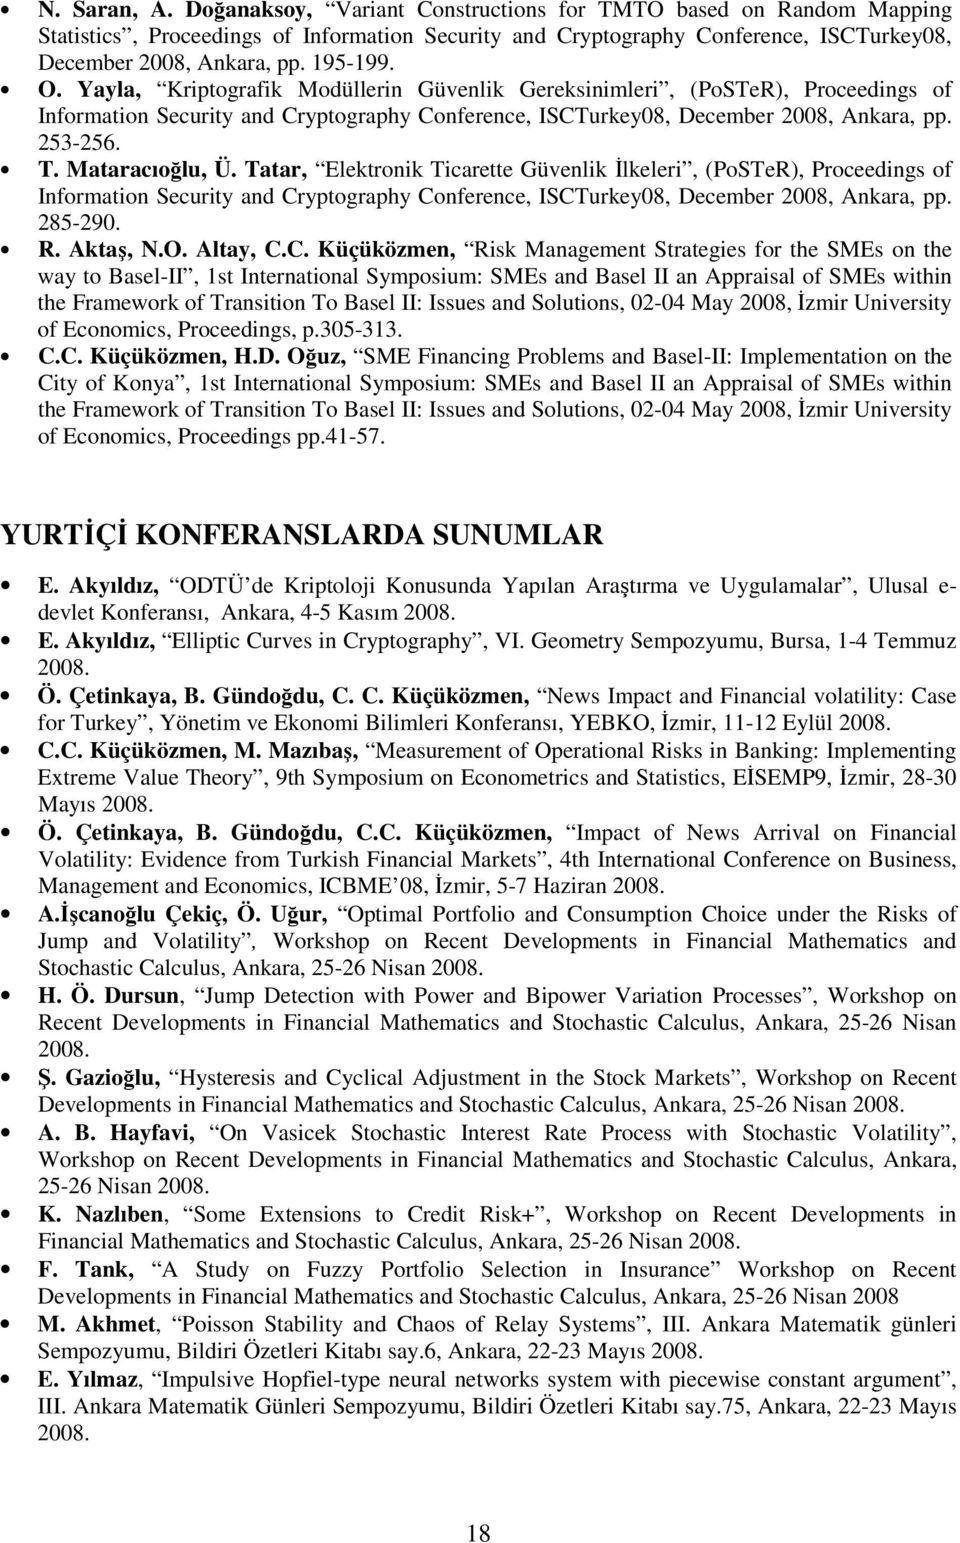 Mataracıoğlu, Ü. Tatar, Elektronik Ticarette Güvenlik Đlkeleri, (PoSTeR), Proceedings of Information Security and Cryptography Conference, ISCTurkey08, December 2008, Ankara, pp. 285-290. R. Aktaş, N.